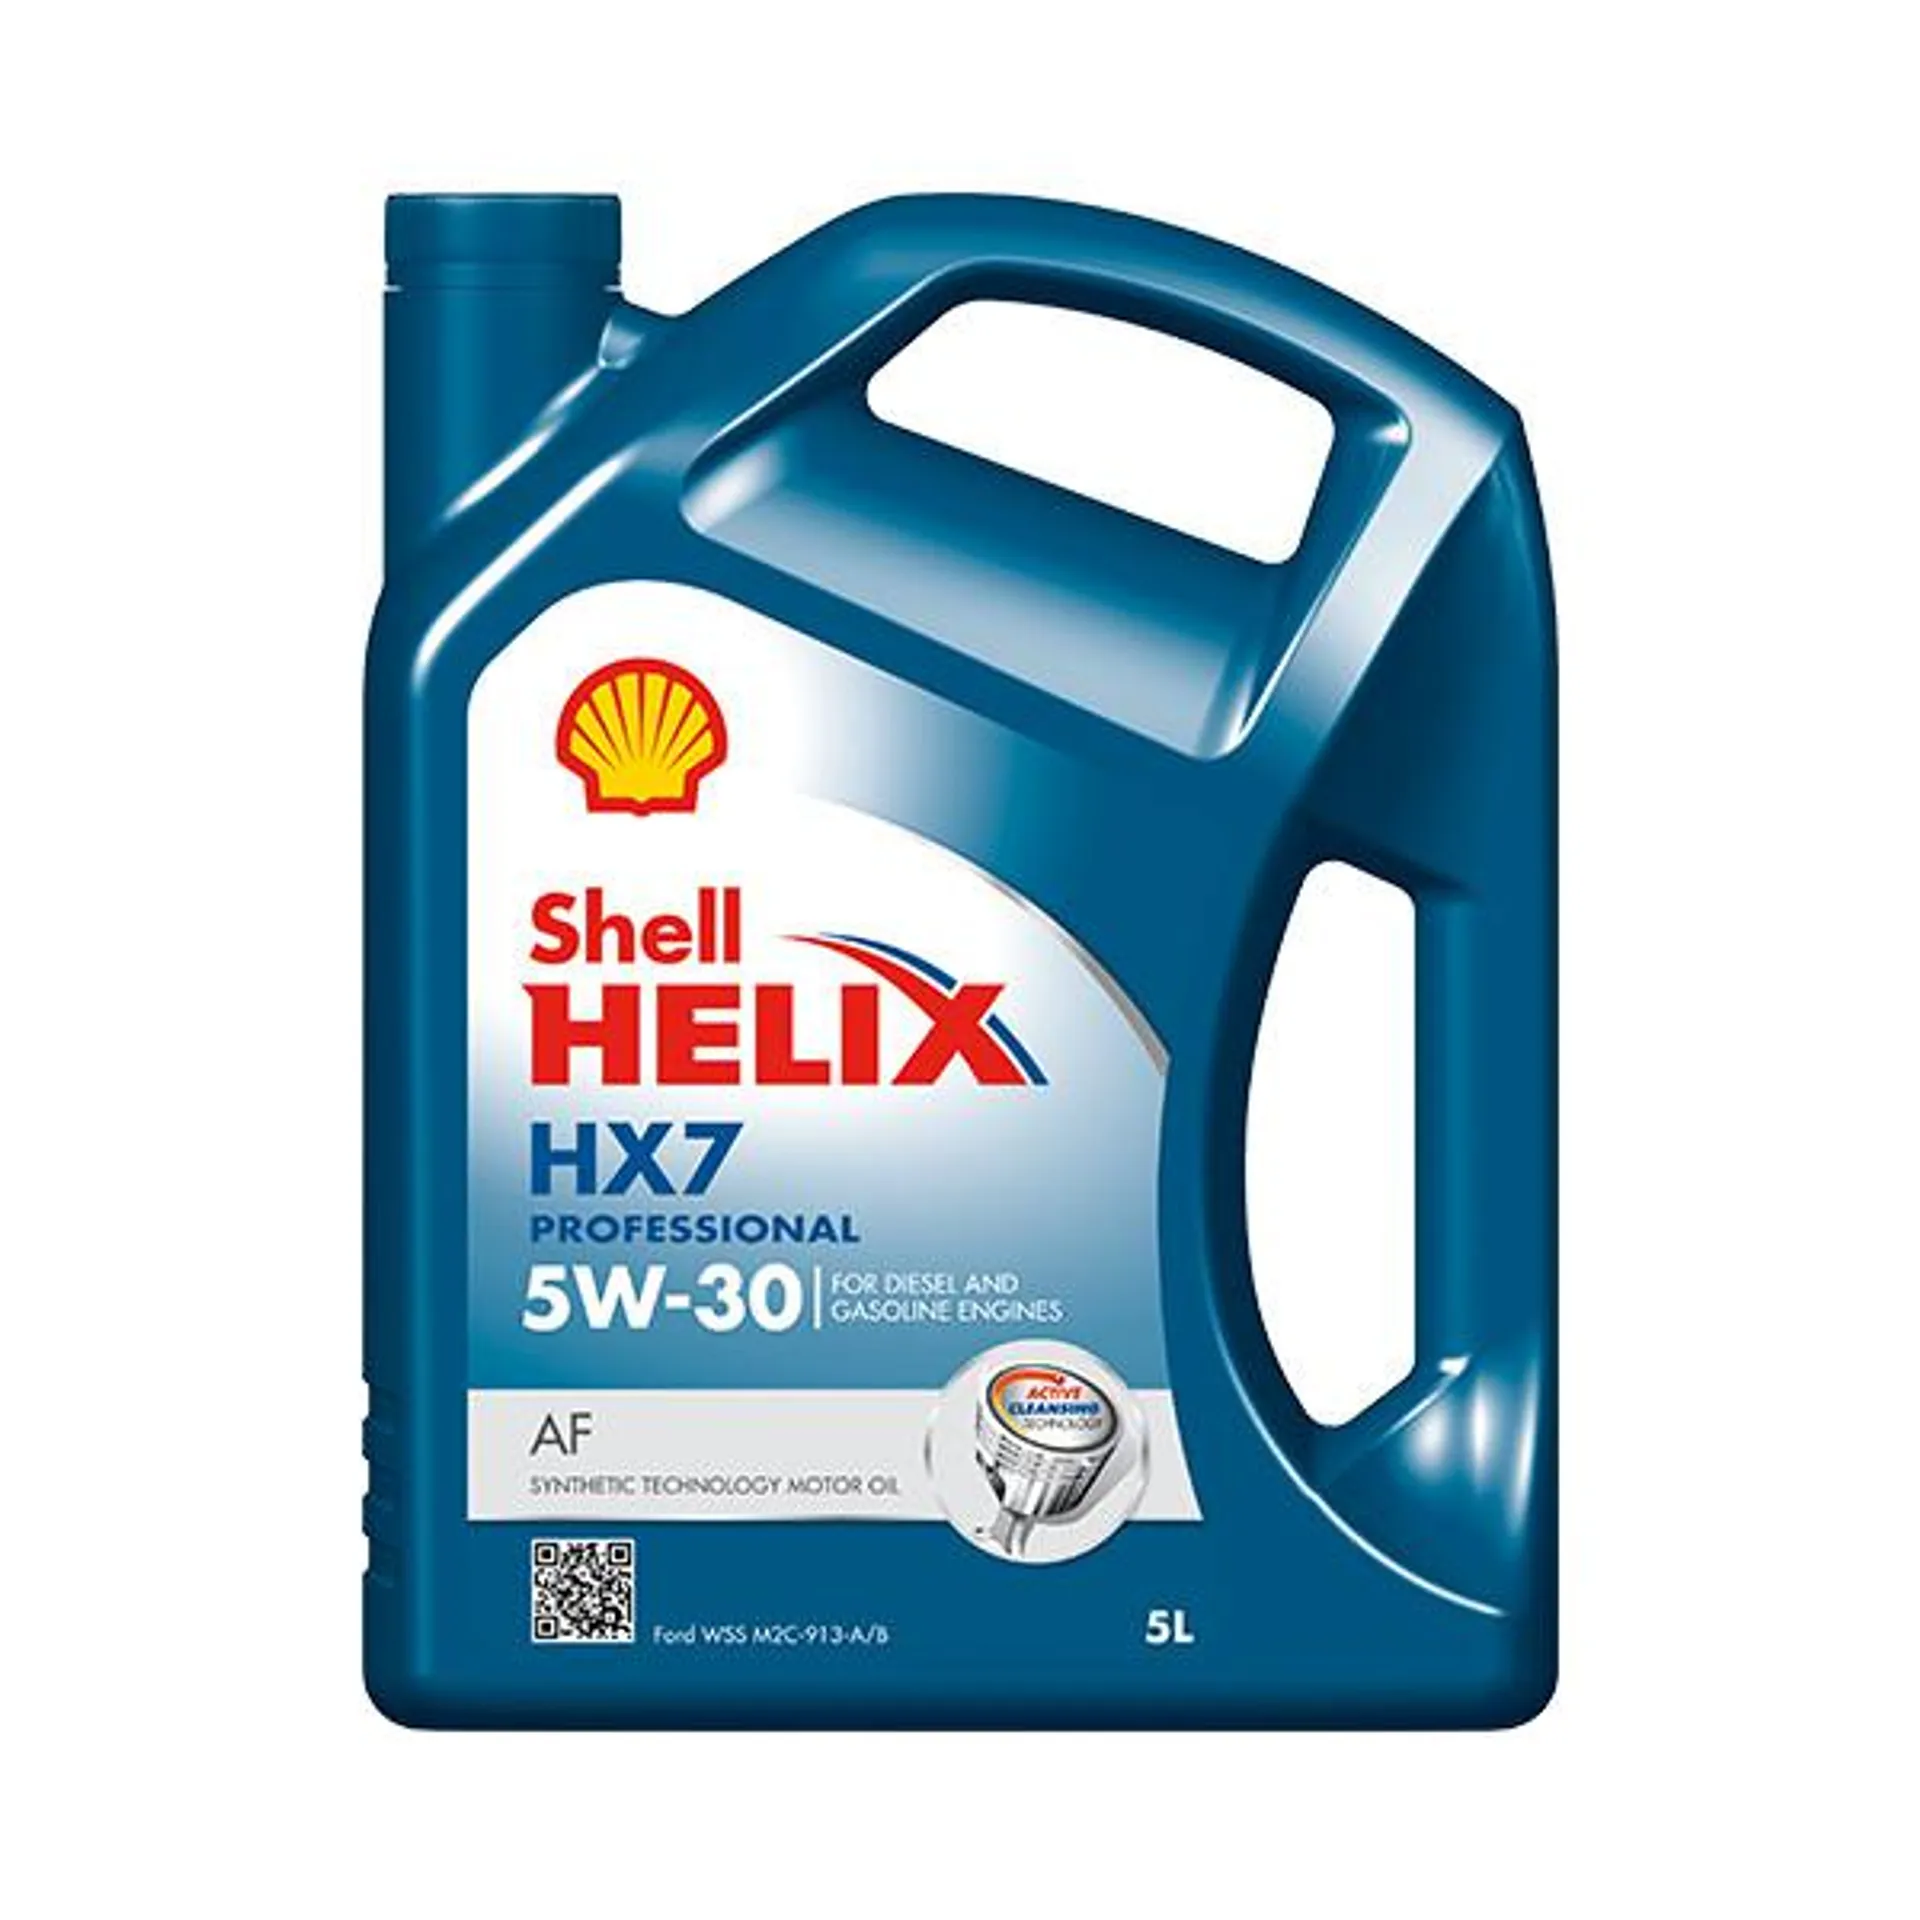 Shell Helix HX7 Professional AF Engine Oil - 5W-30 - 5Ltr